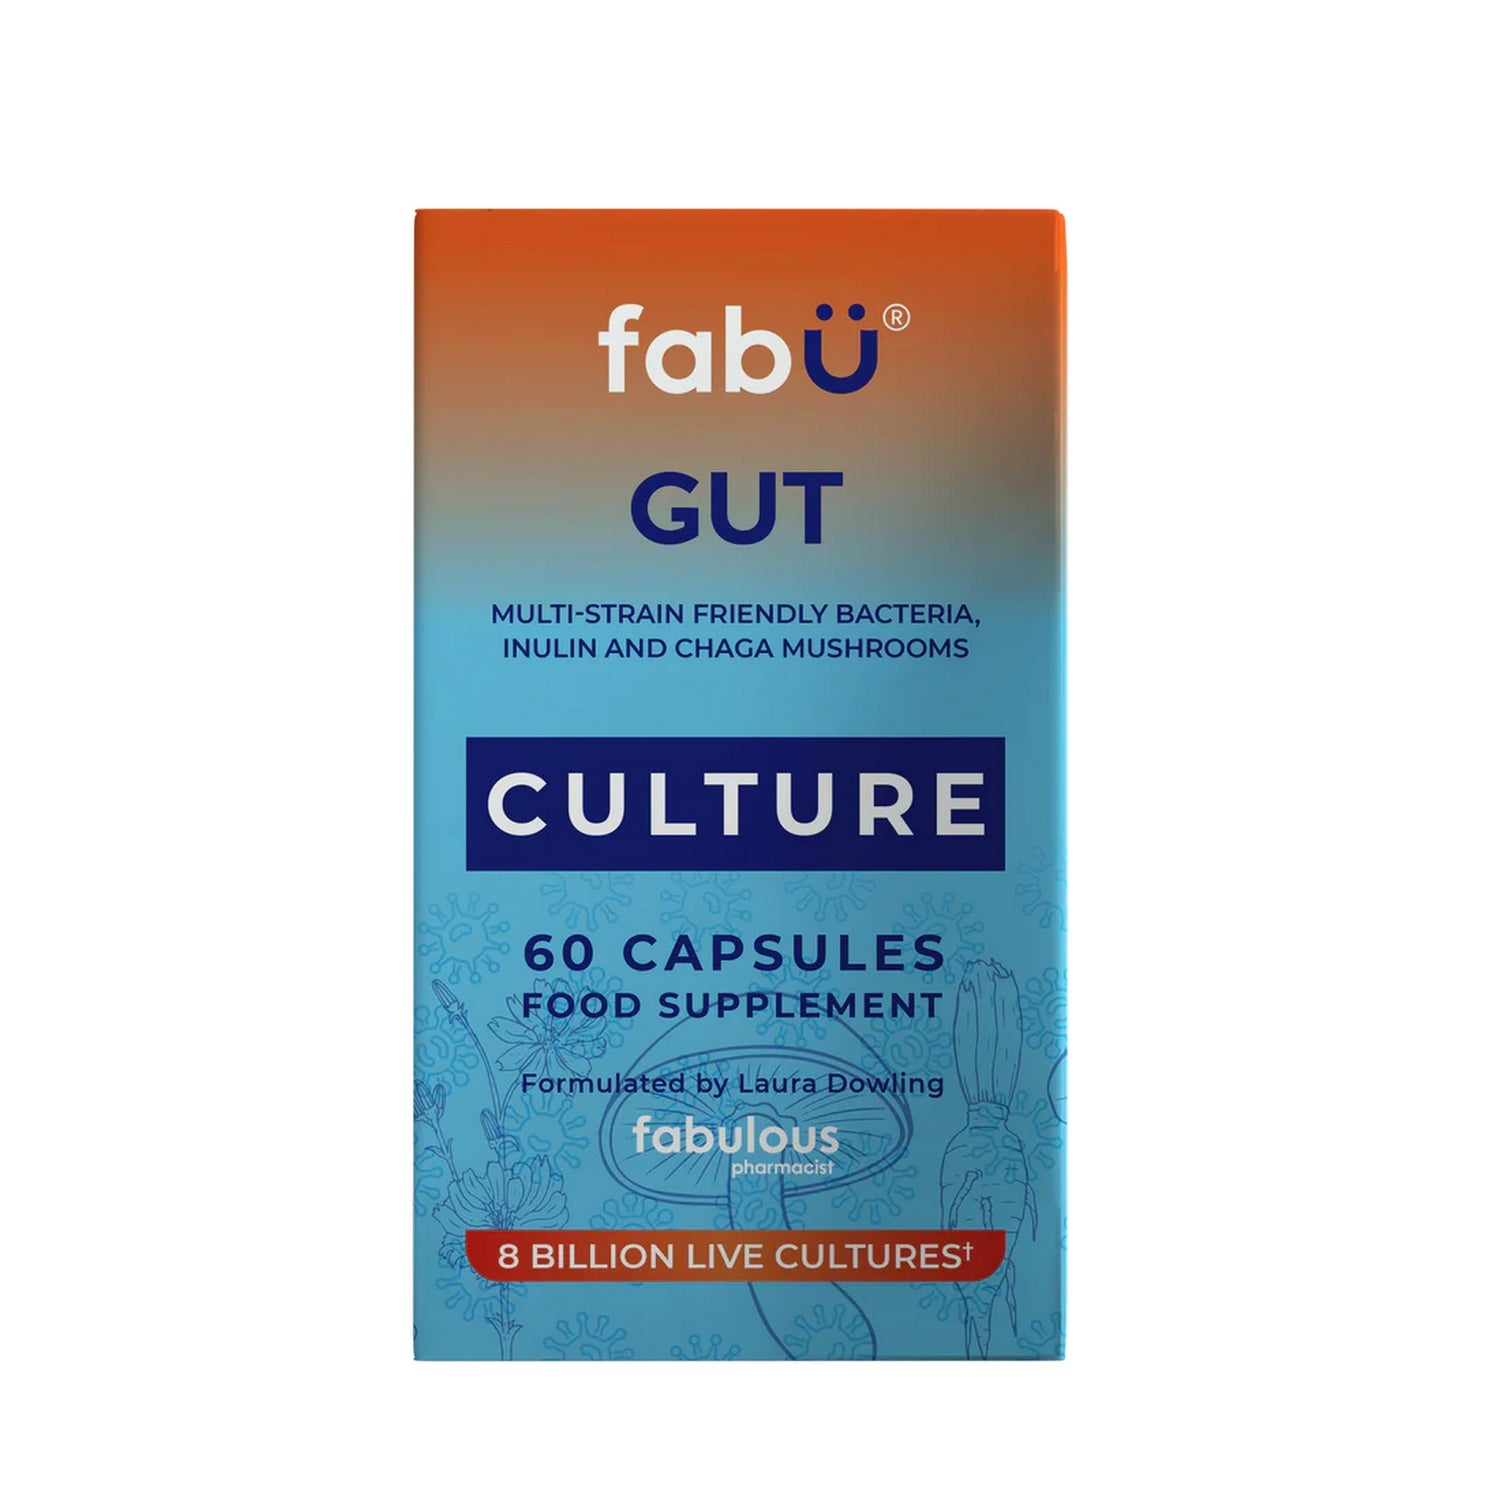 FabU Gut Culture 60 Capsules front of box